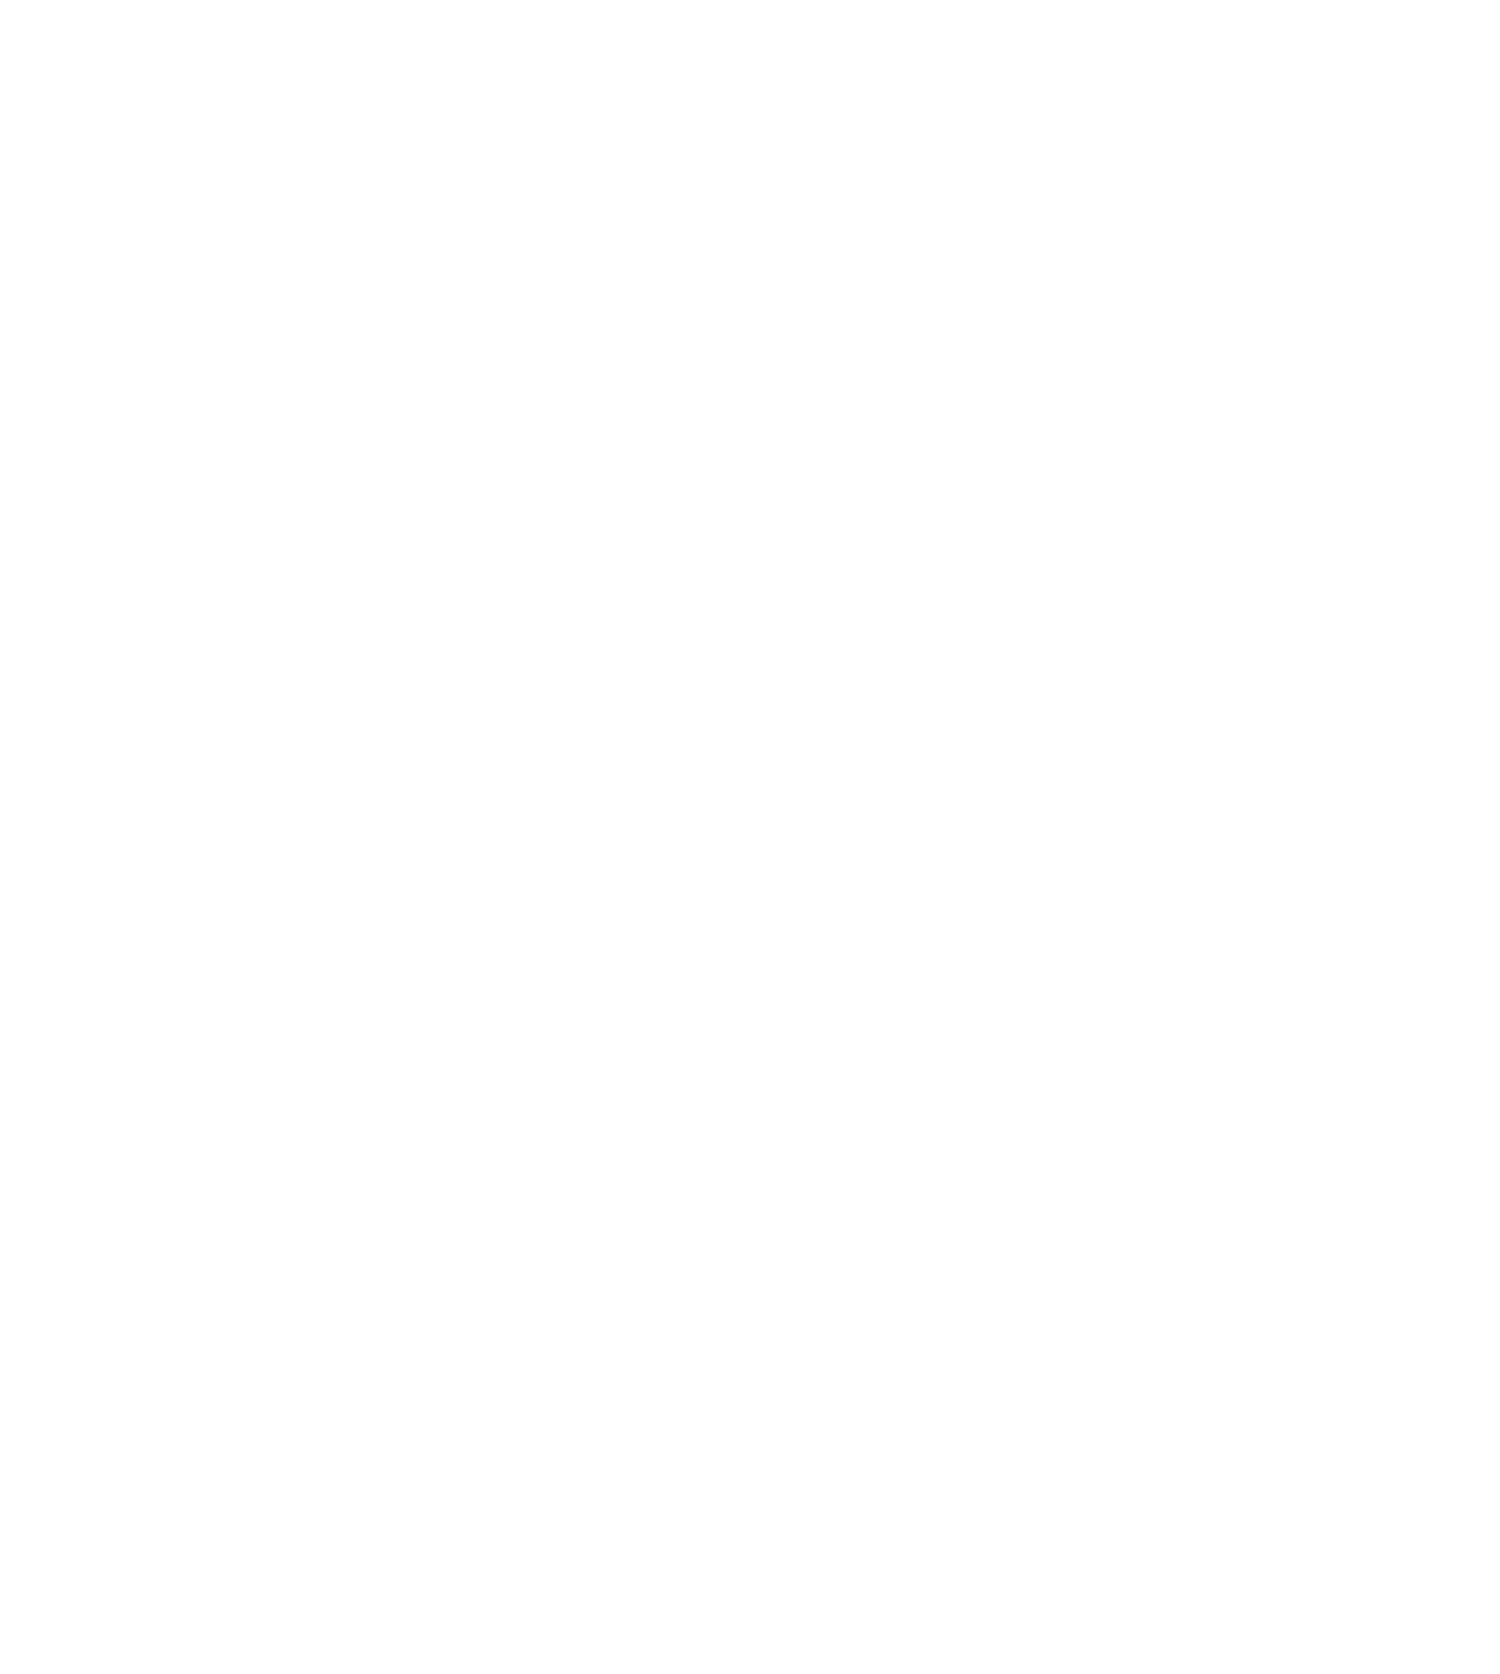 Film Mongers | Video Production Company London